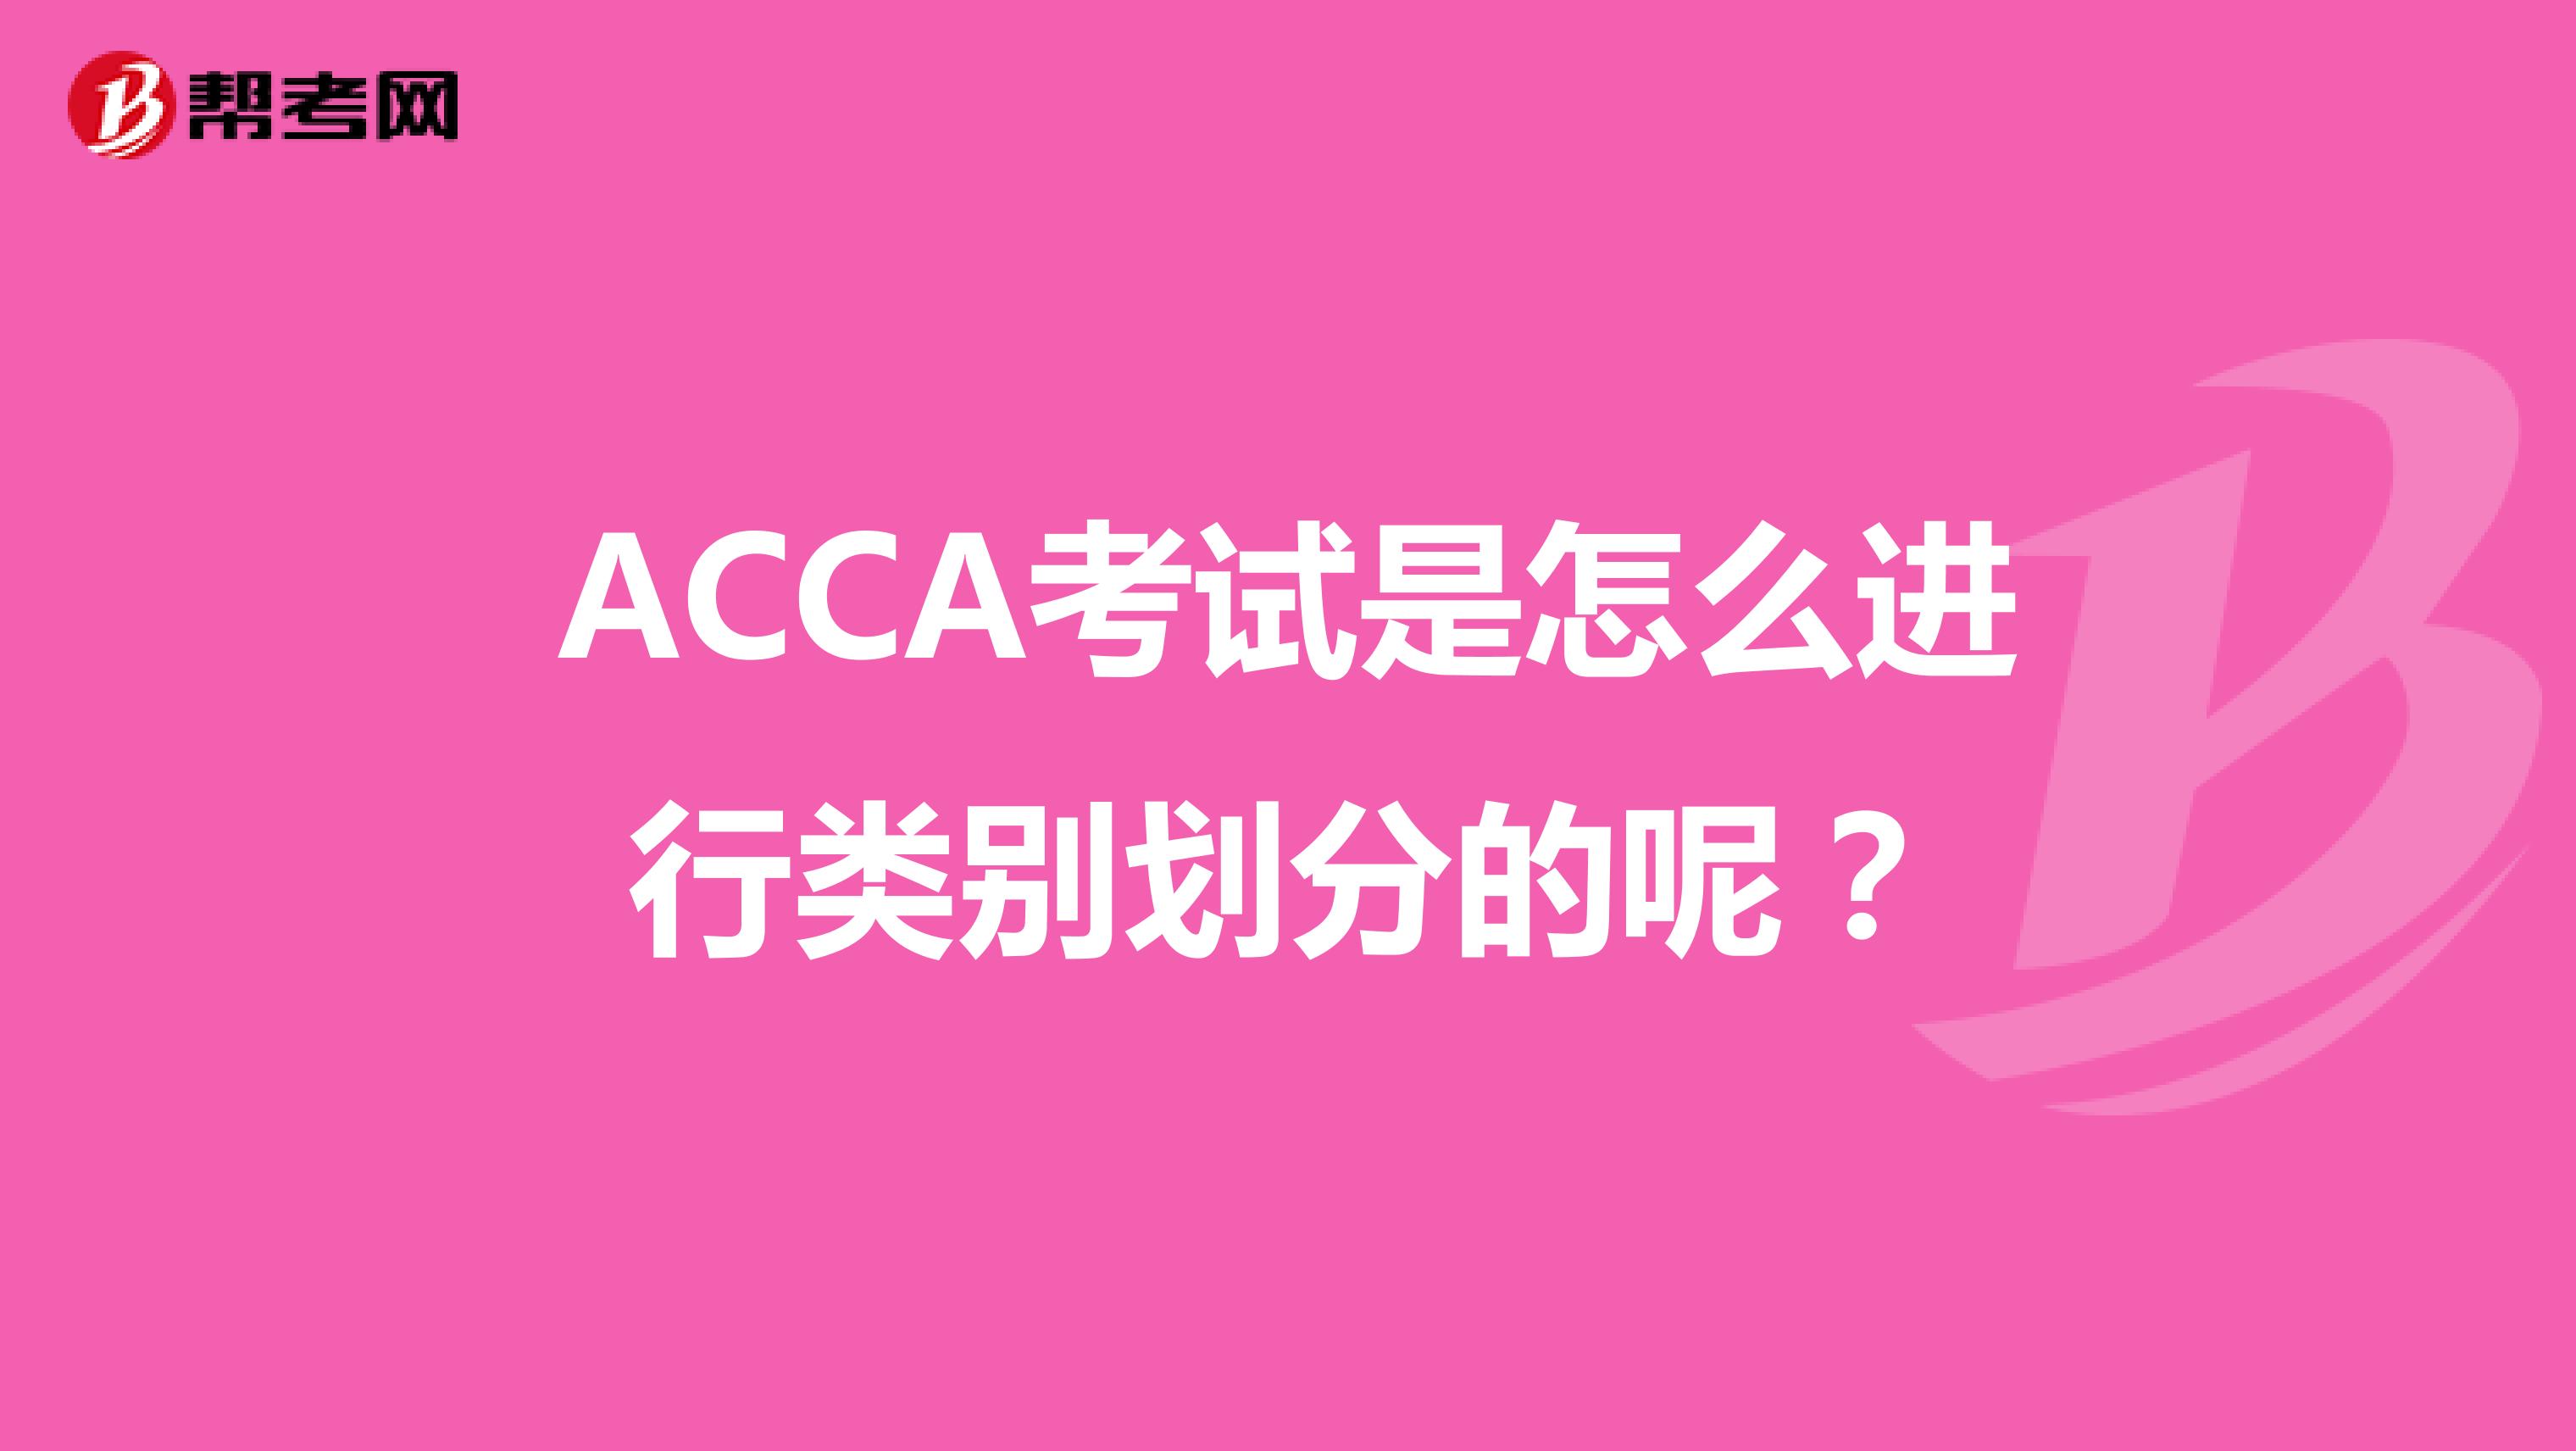 ACCA考试是怎么进行类别划分的呢？